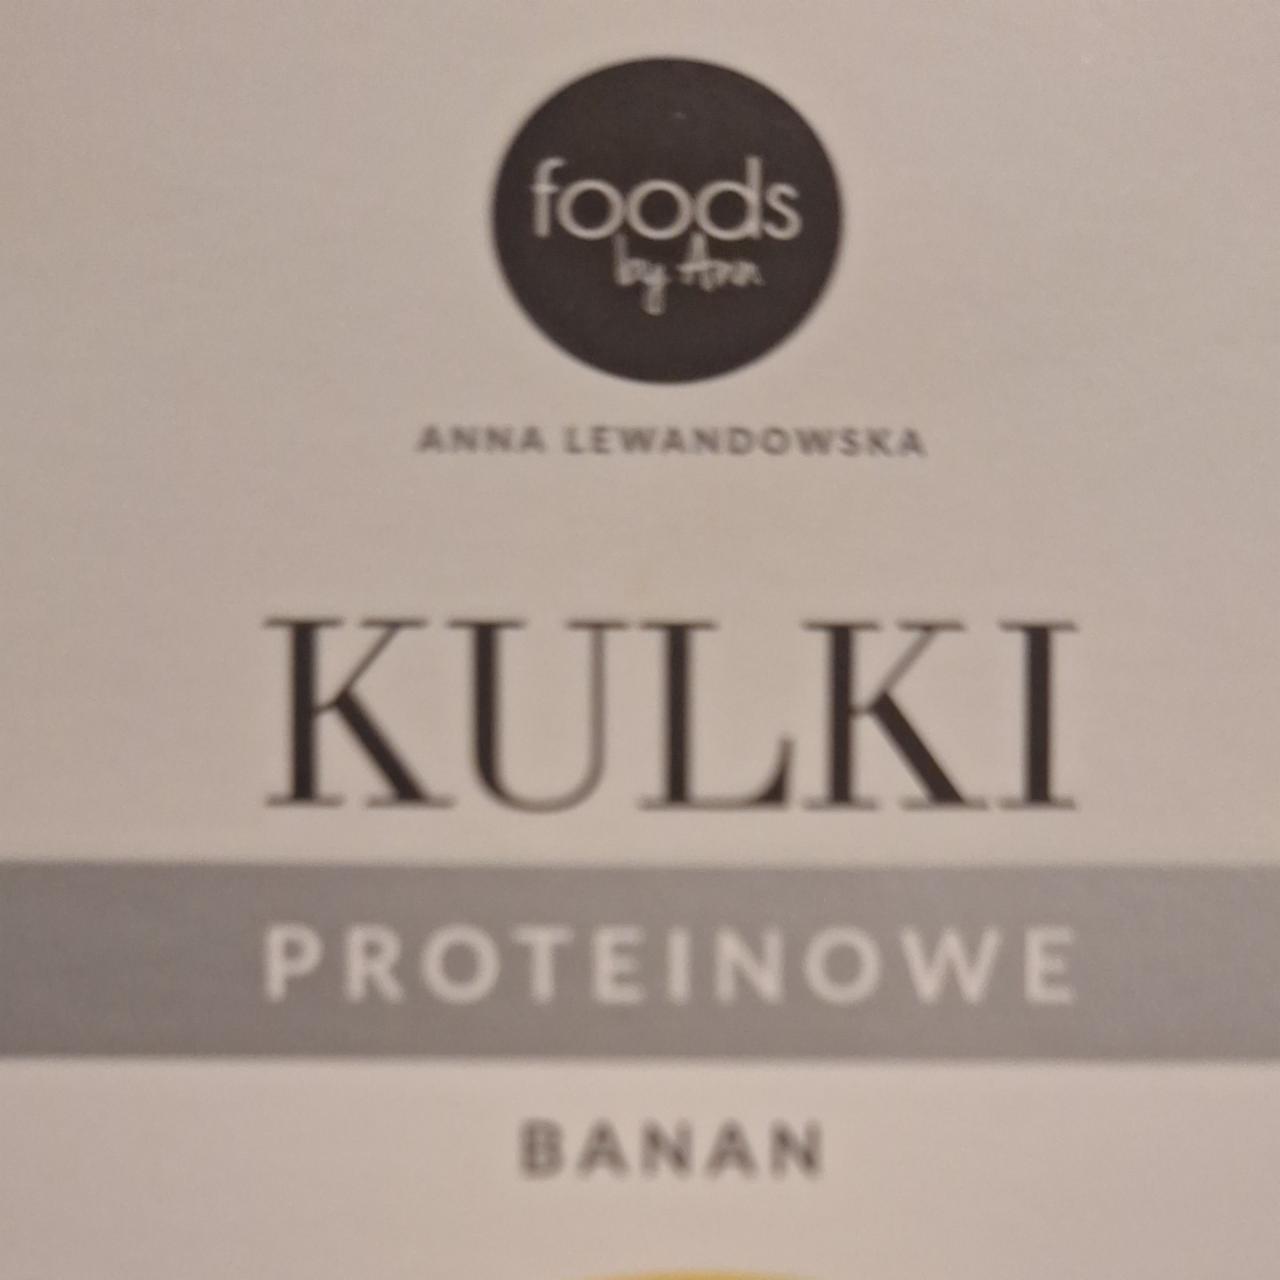 Zdjęcia - Kulki proteinowe banan Foods by Ann